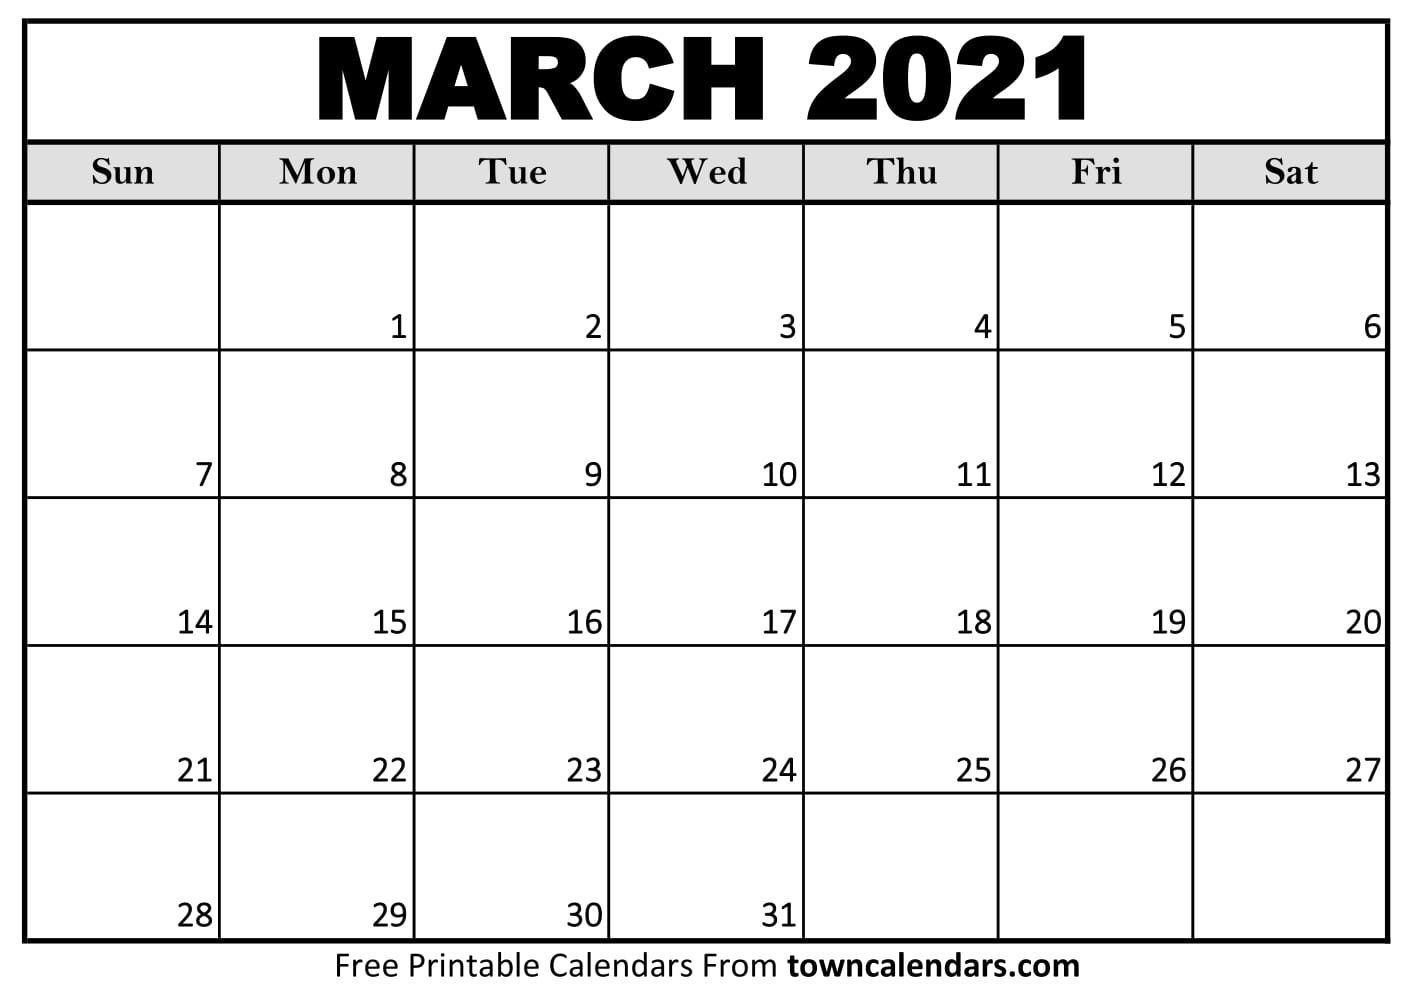 Printable March 2021 Calendar - Towncalendars